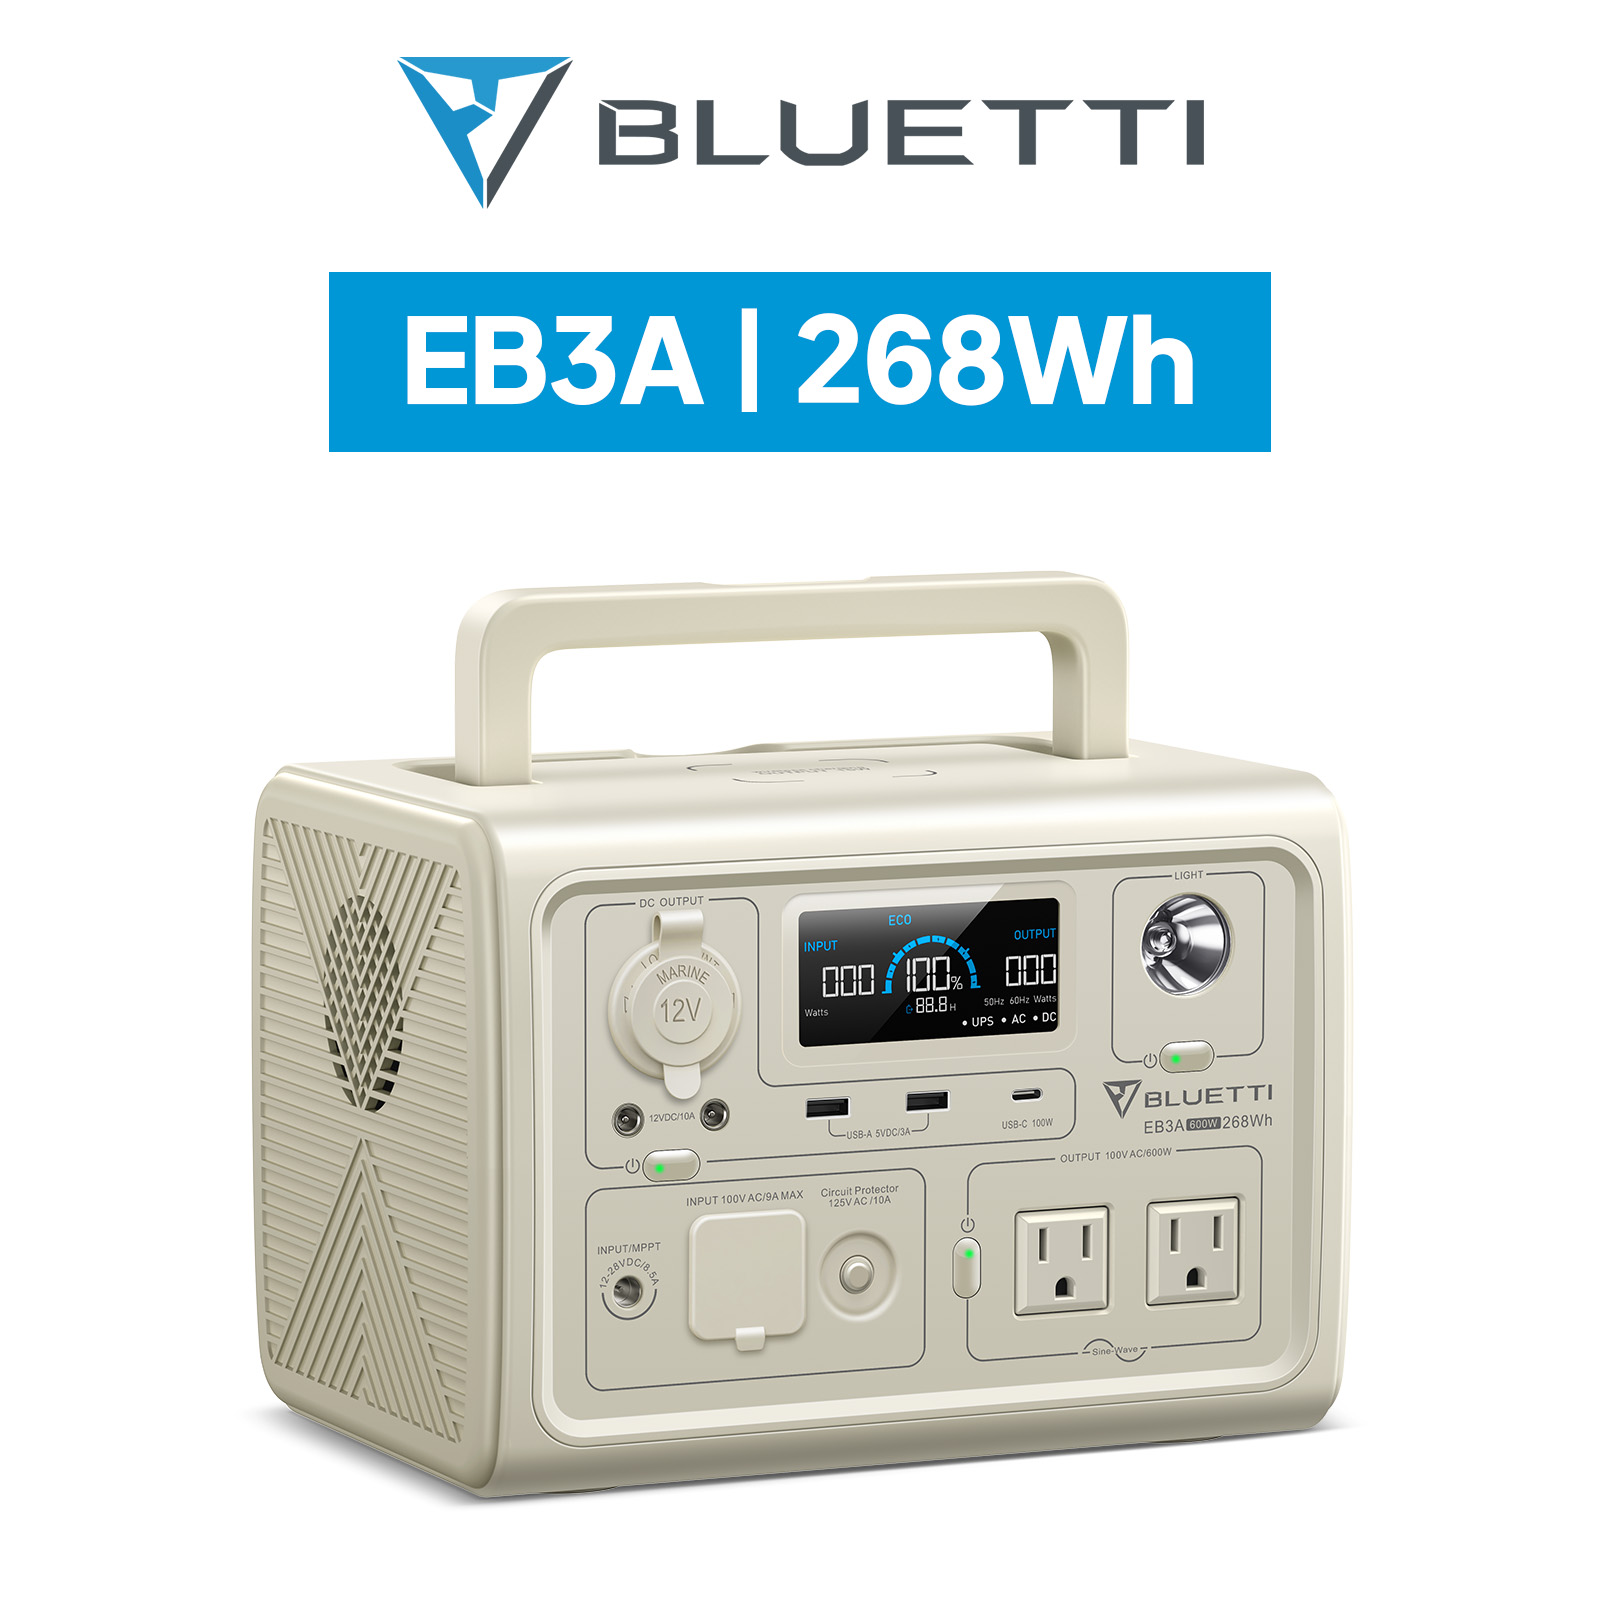 BLUETTI ポータブル電源 EB3A ベージュ 268Wh/600W 軽量 小型 蓄電池 家庭用  リン酸鉄リチウムイオン ポータブルバッテリー  防災 停電 アウトドア キャンプ